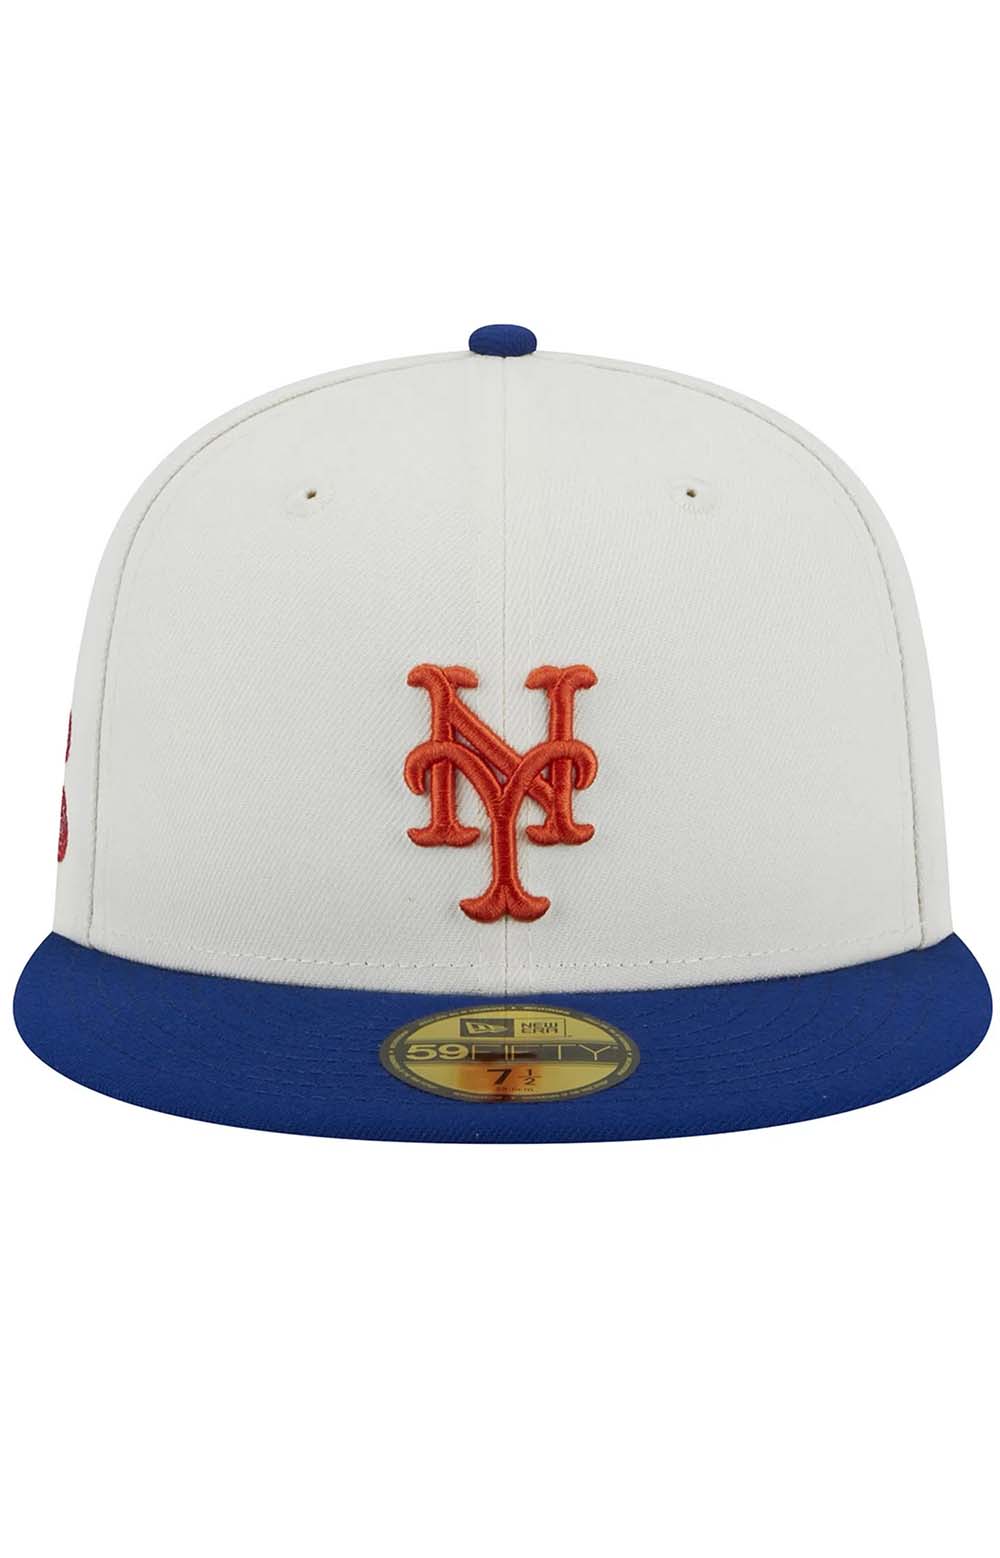 New Era NY Mets 5950 Retro Fitted Cap